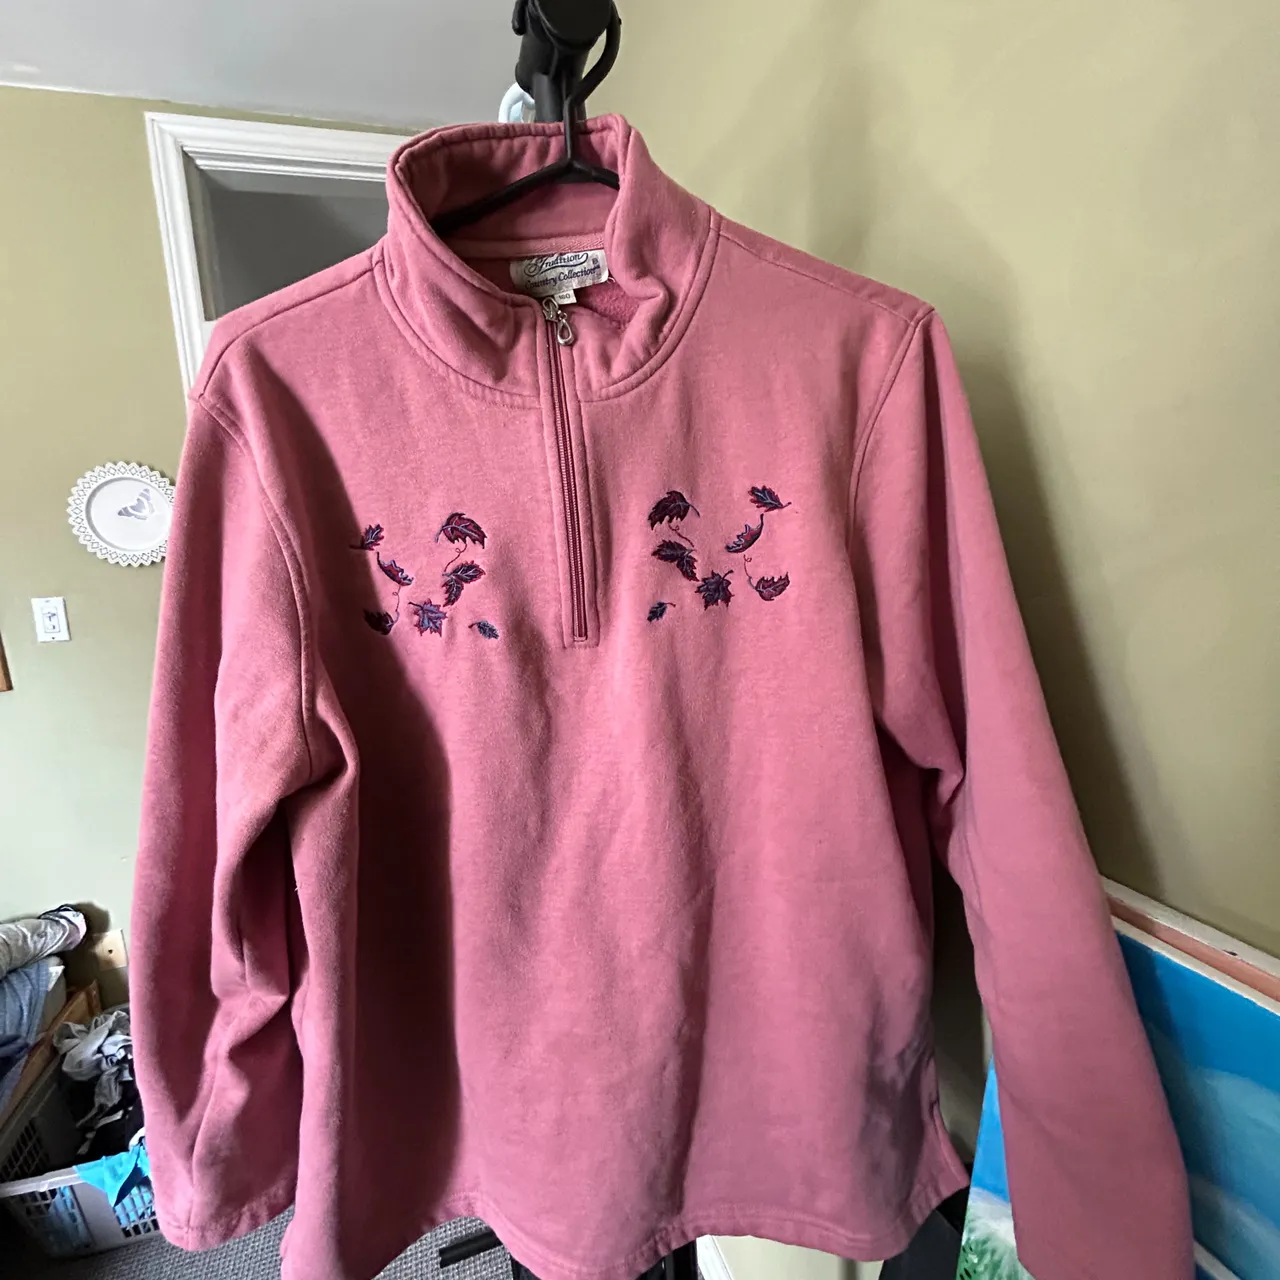 Pink Sweater photo 1